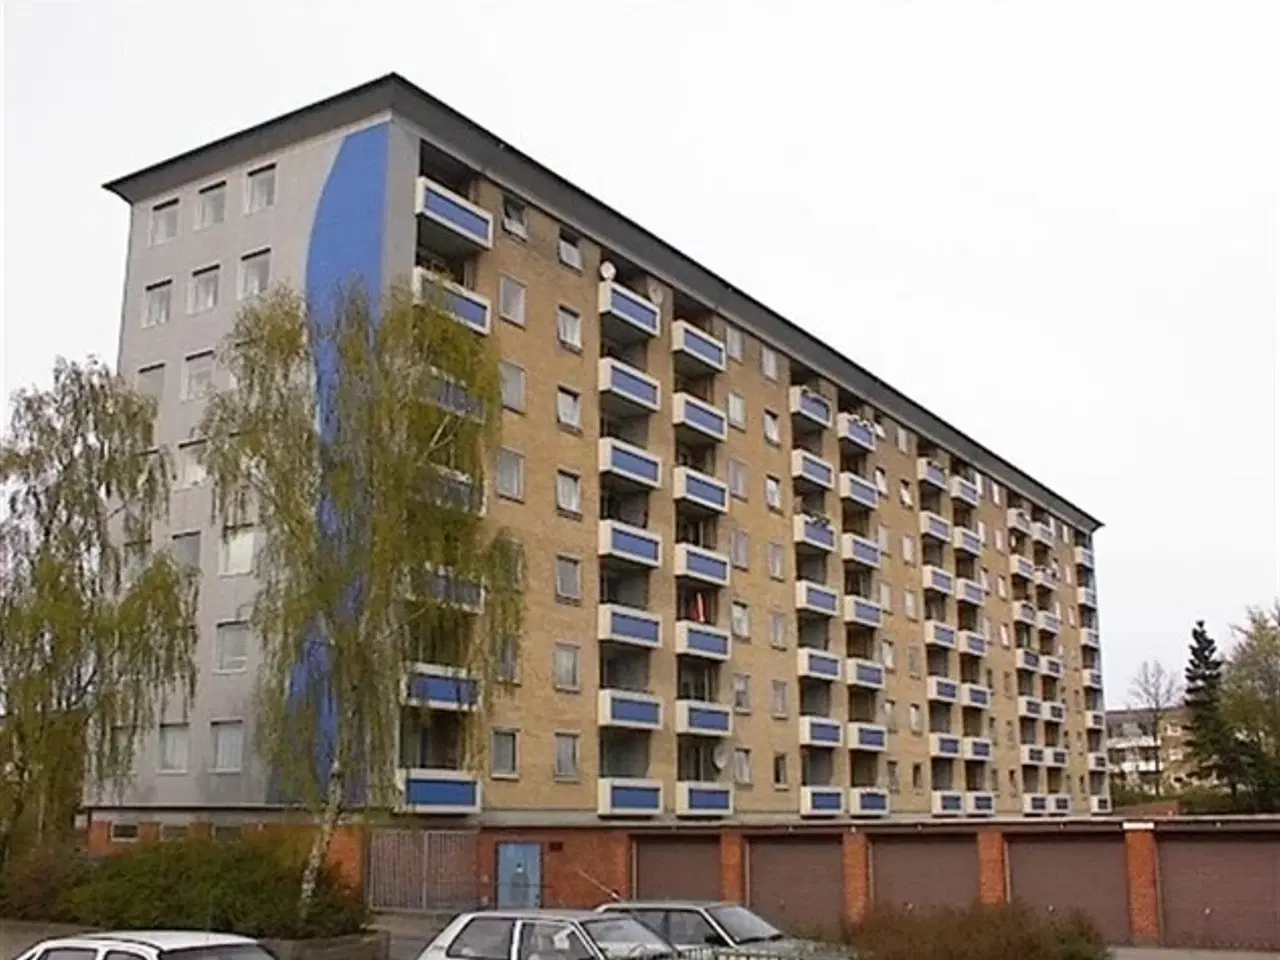 Billede 1 - 76 m2 lejlighed på Glarbjergvej, Randers NØ, Aarhus